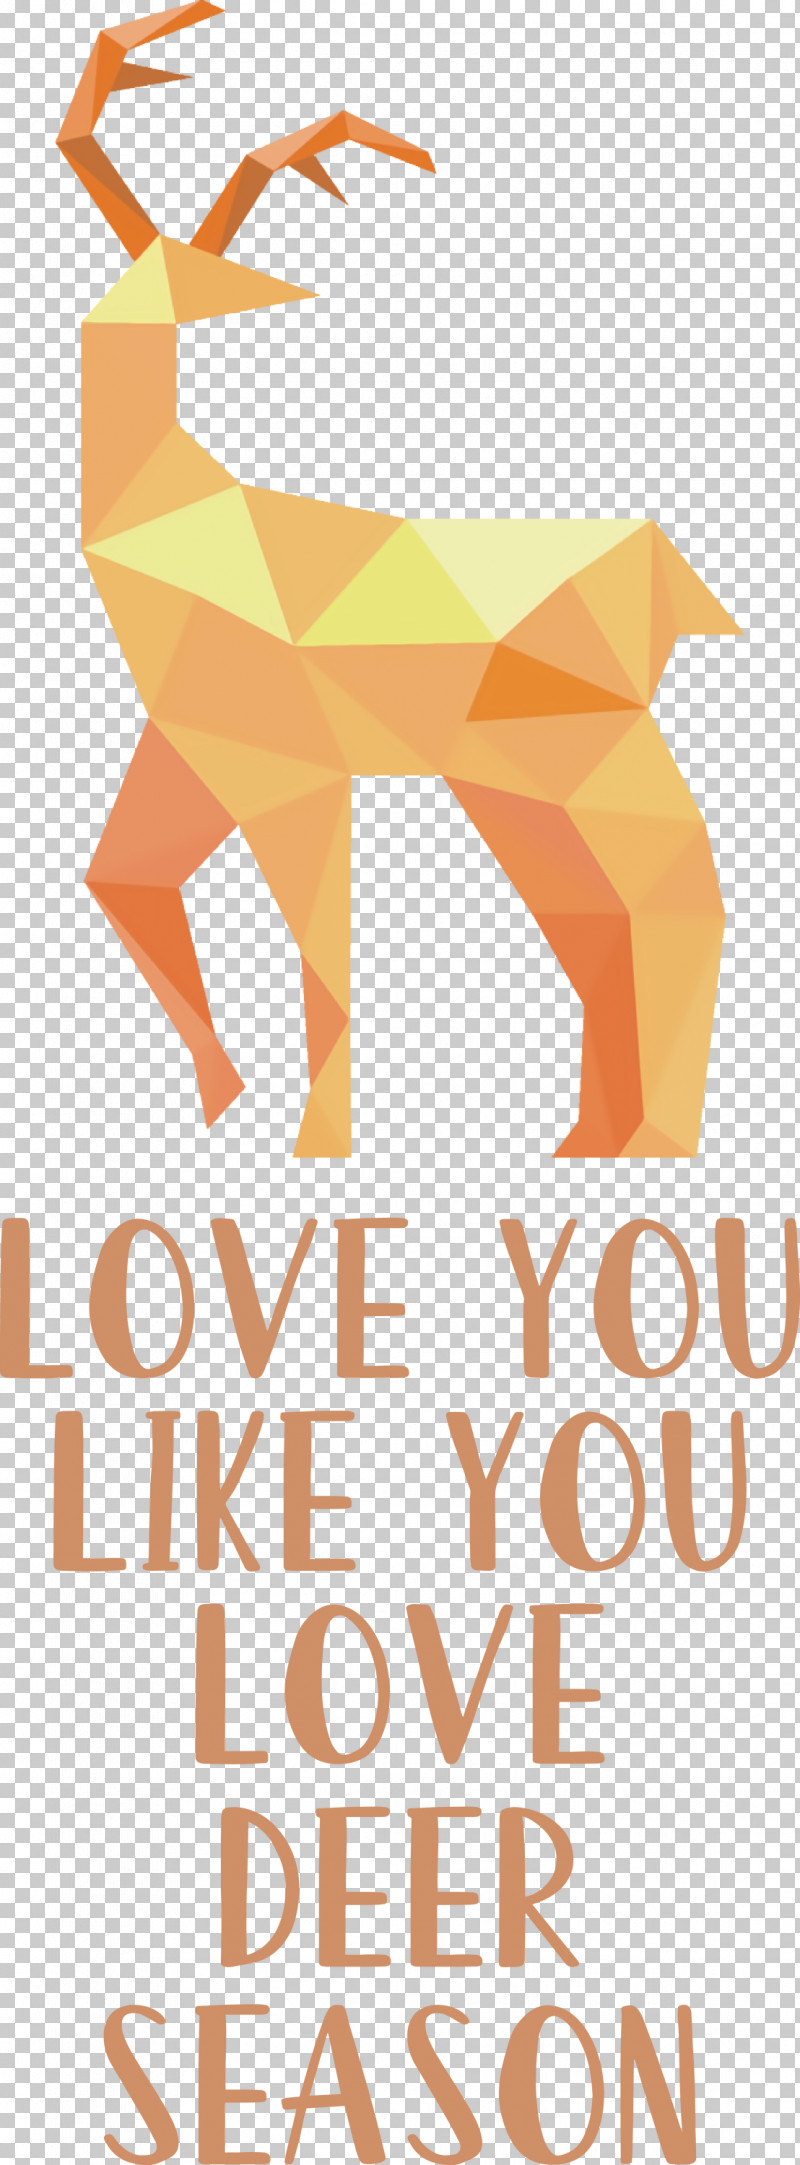 Love Deer Season PNG, Clipart, Deer, Human Skeleton, Joint, Line, Logo Free PNG Download